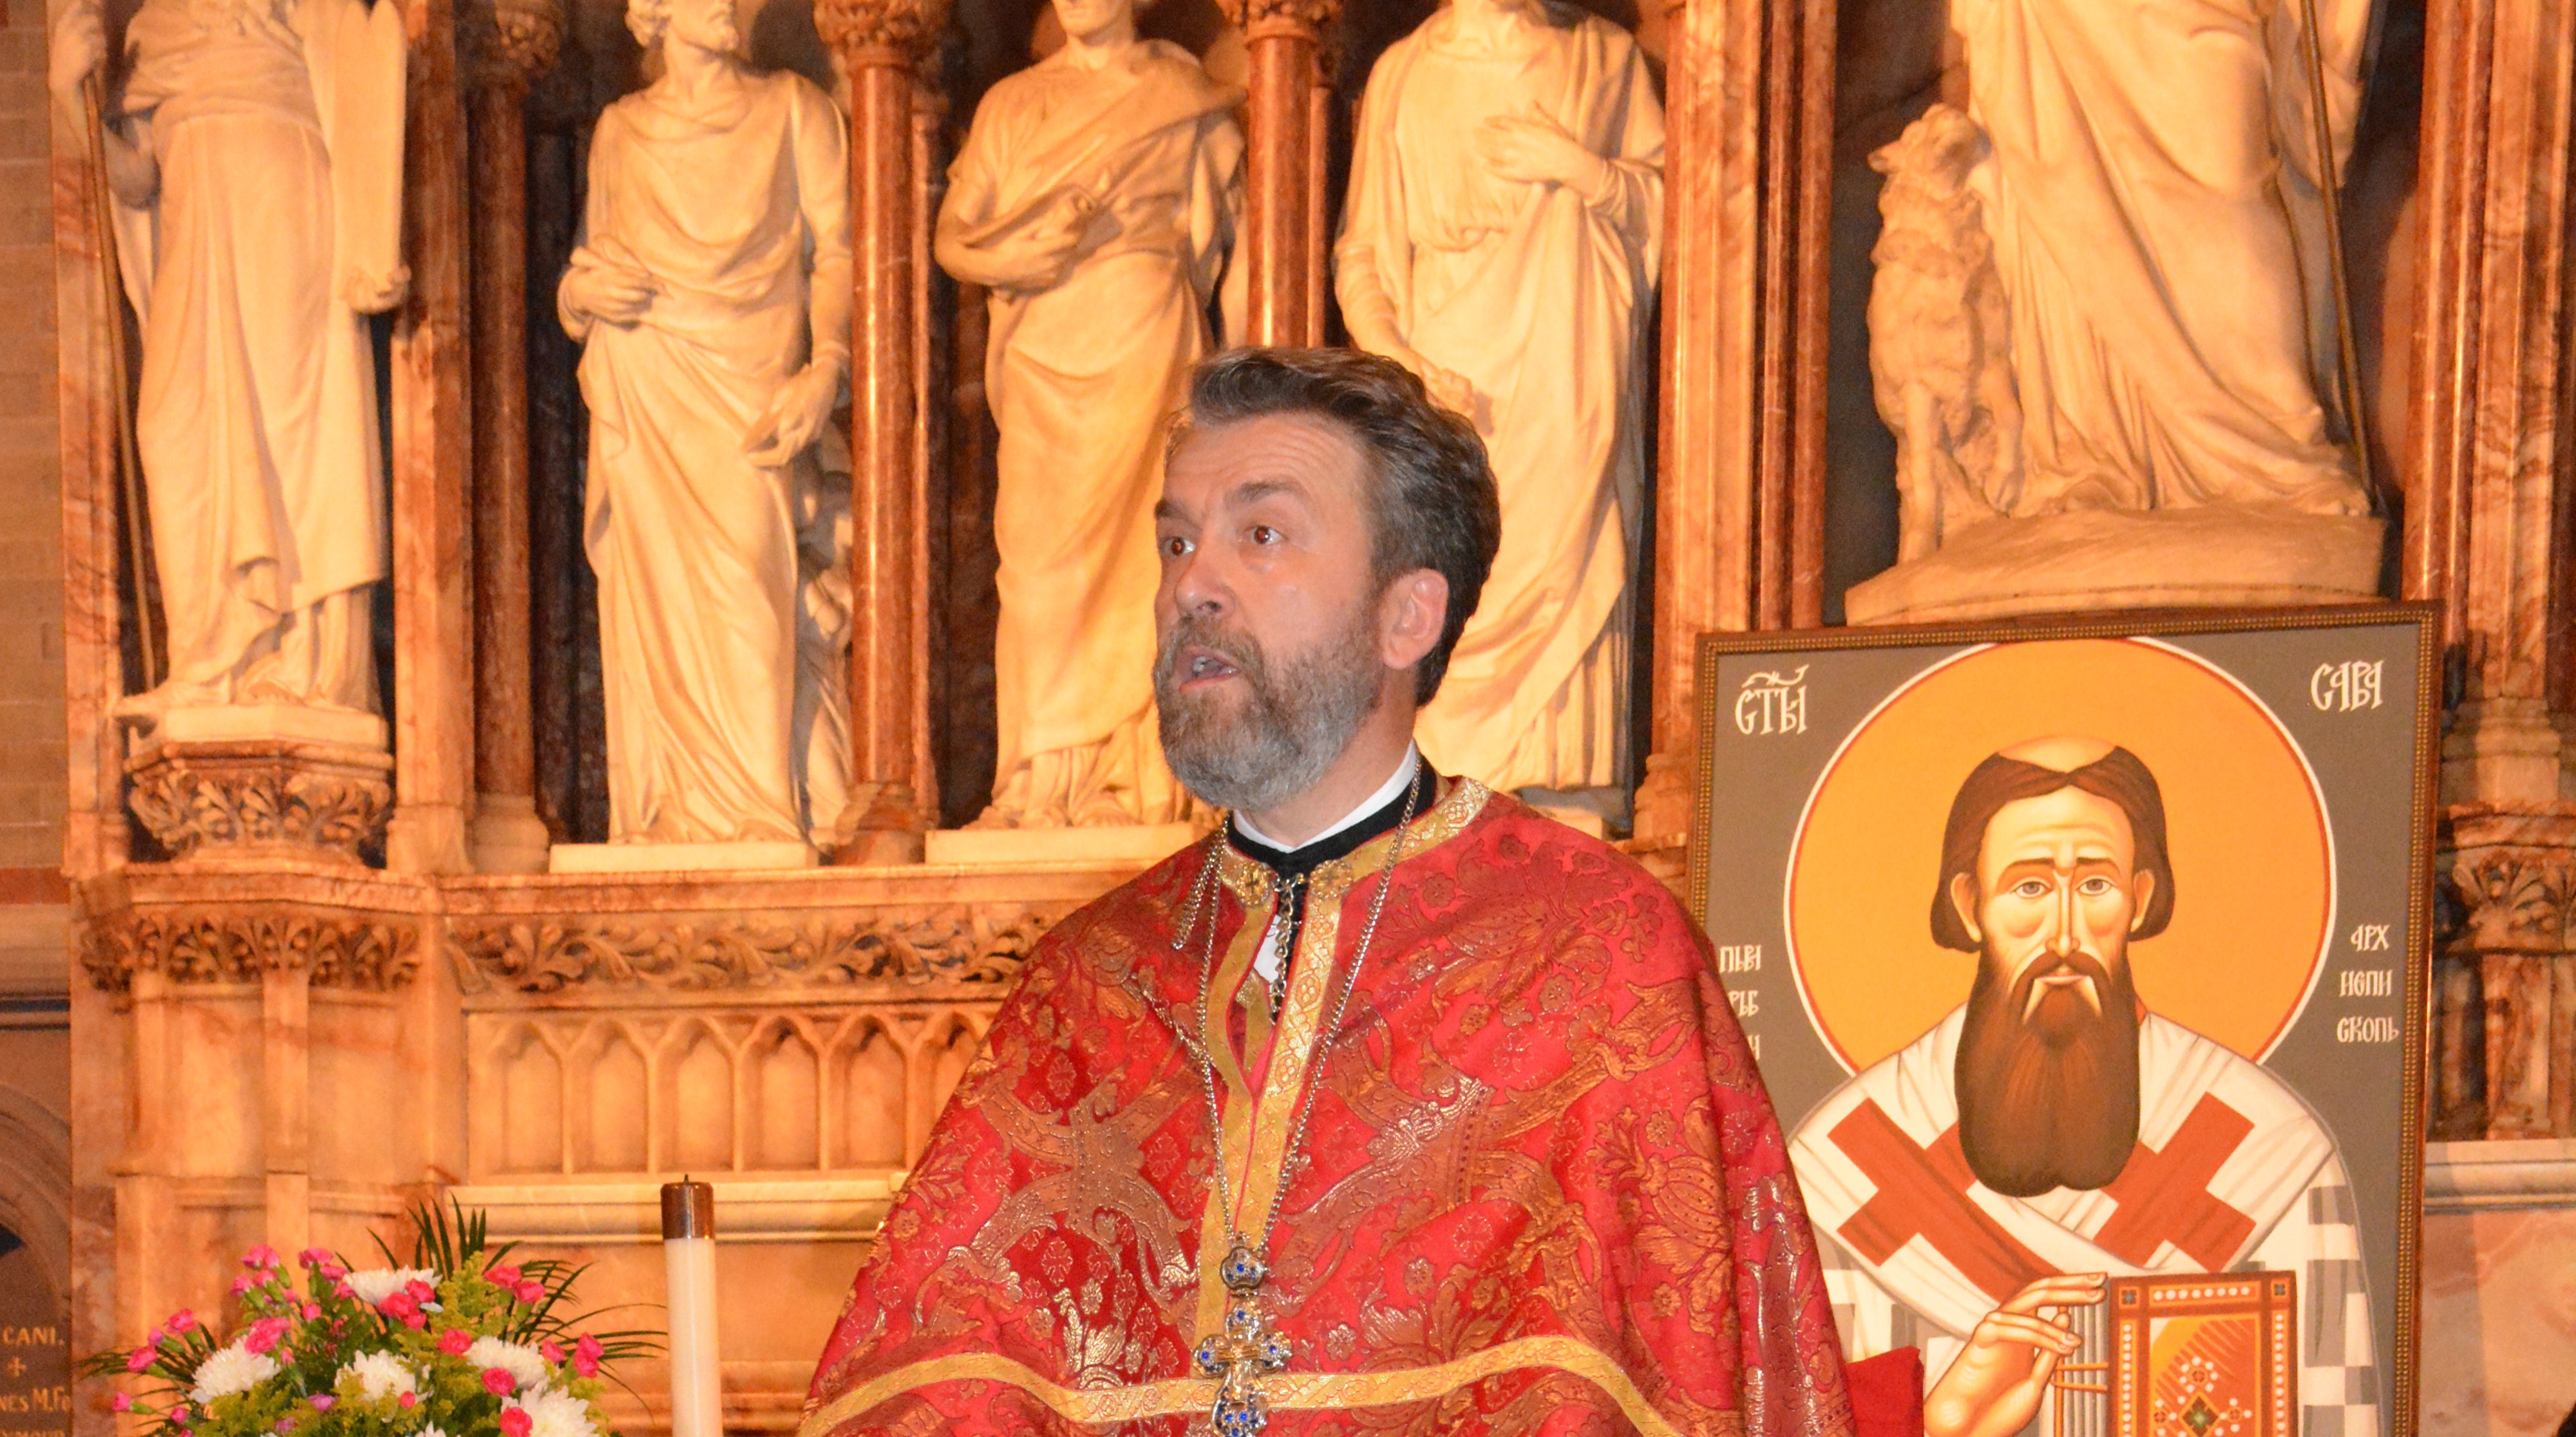 Father Živojin’s Sermon from September 4, 2016